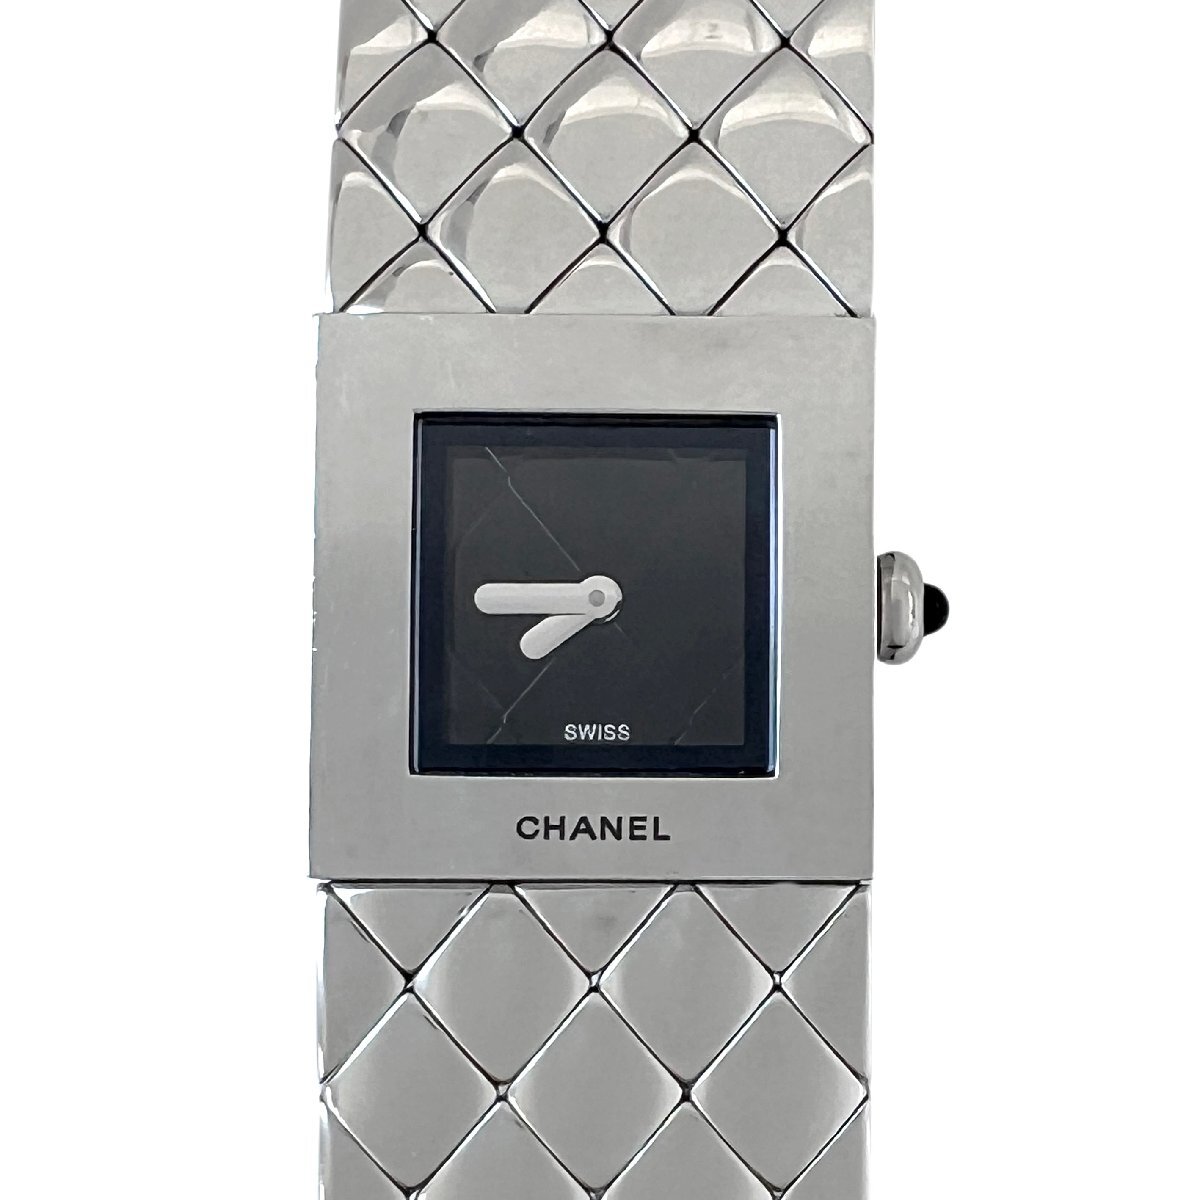 CHANEL Chanel часы часы matelasse женский SS кварц чёрный циферблат 